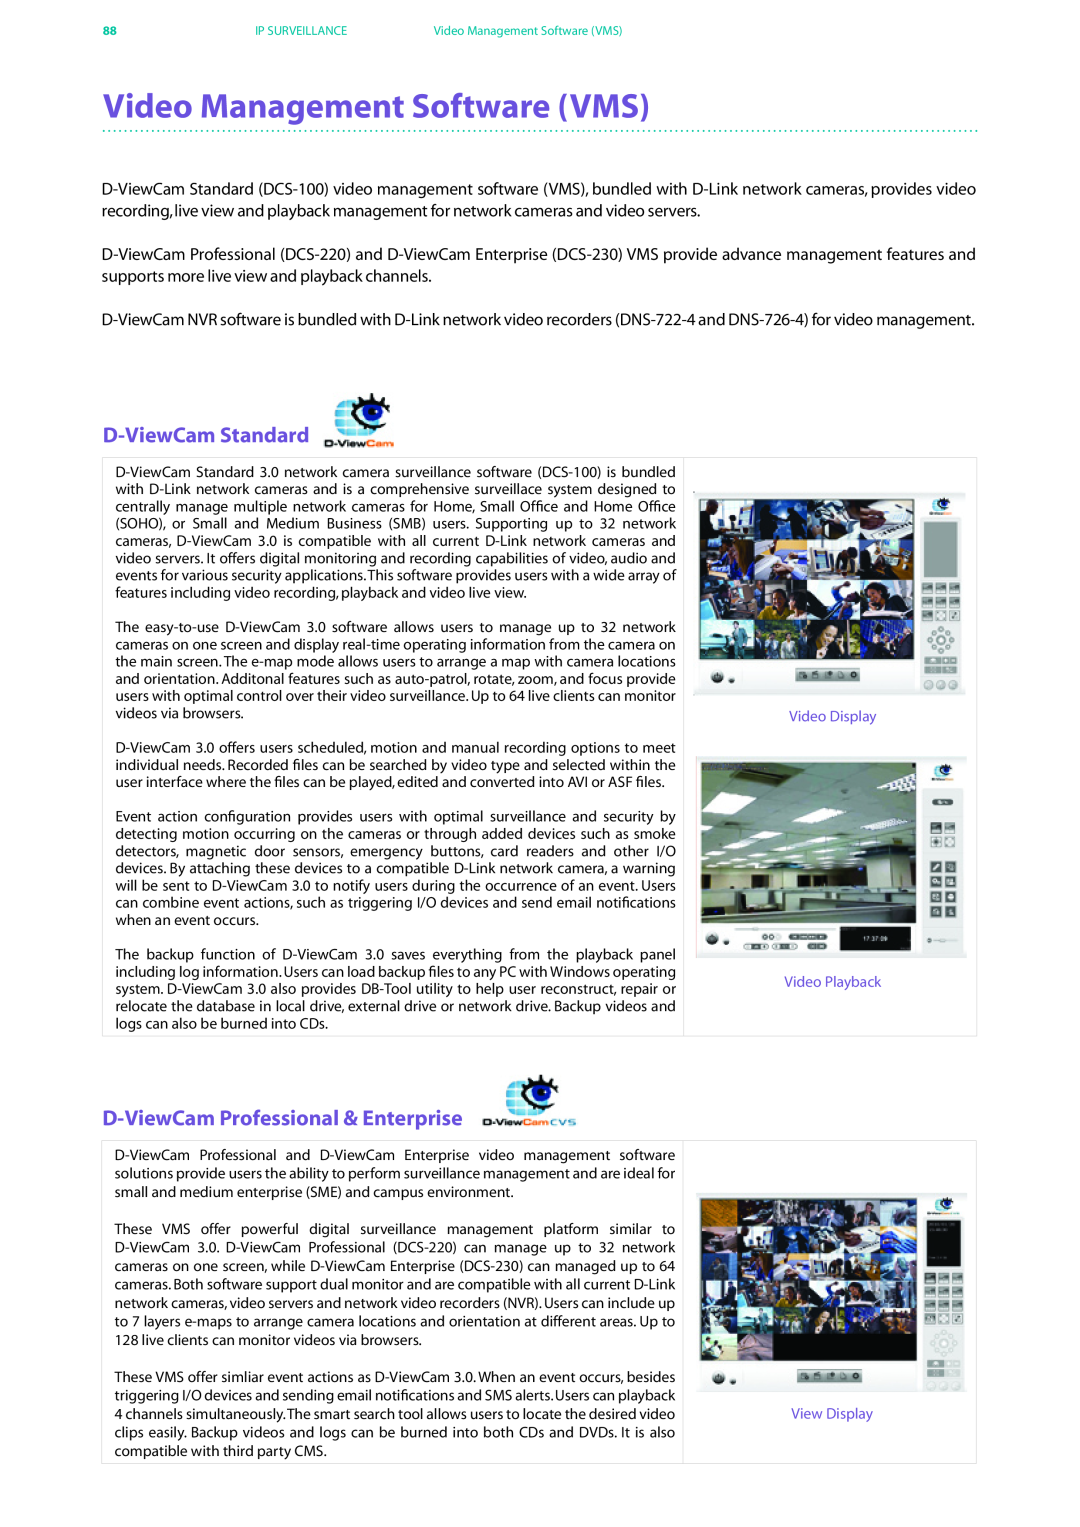 D-Link DES-7200 manual Video Management Software VMS, D-ViewCam Standard, D-ViewCam Professional & Enterprise 